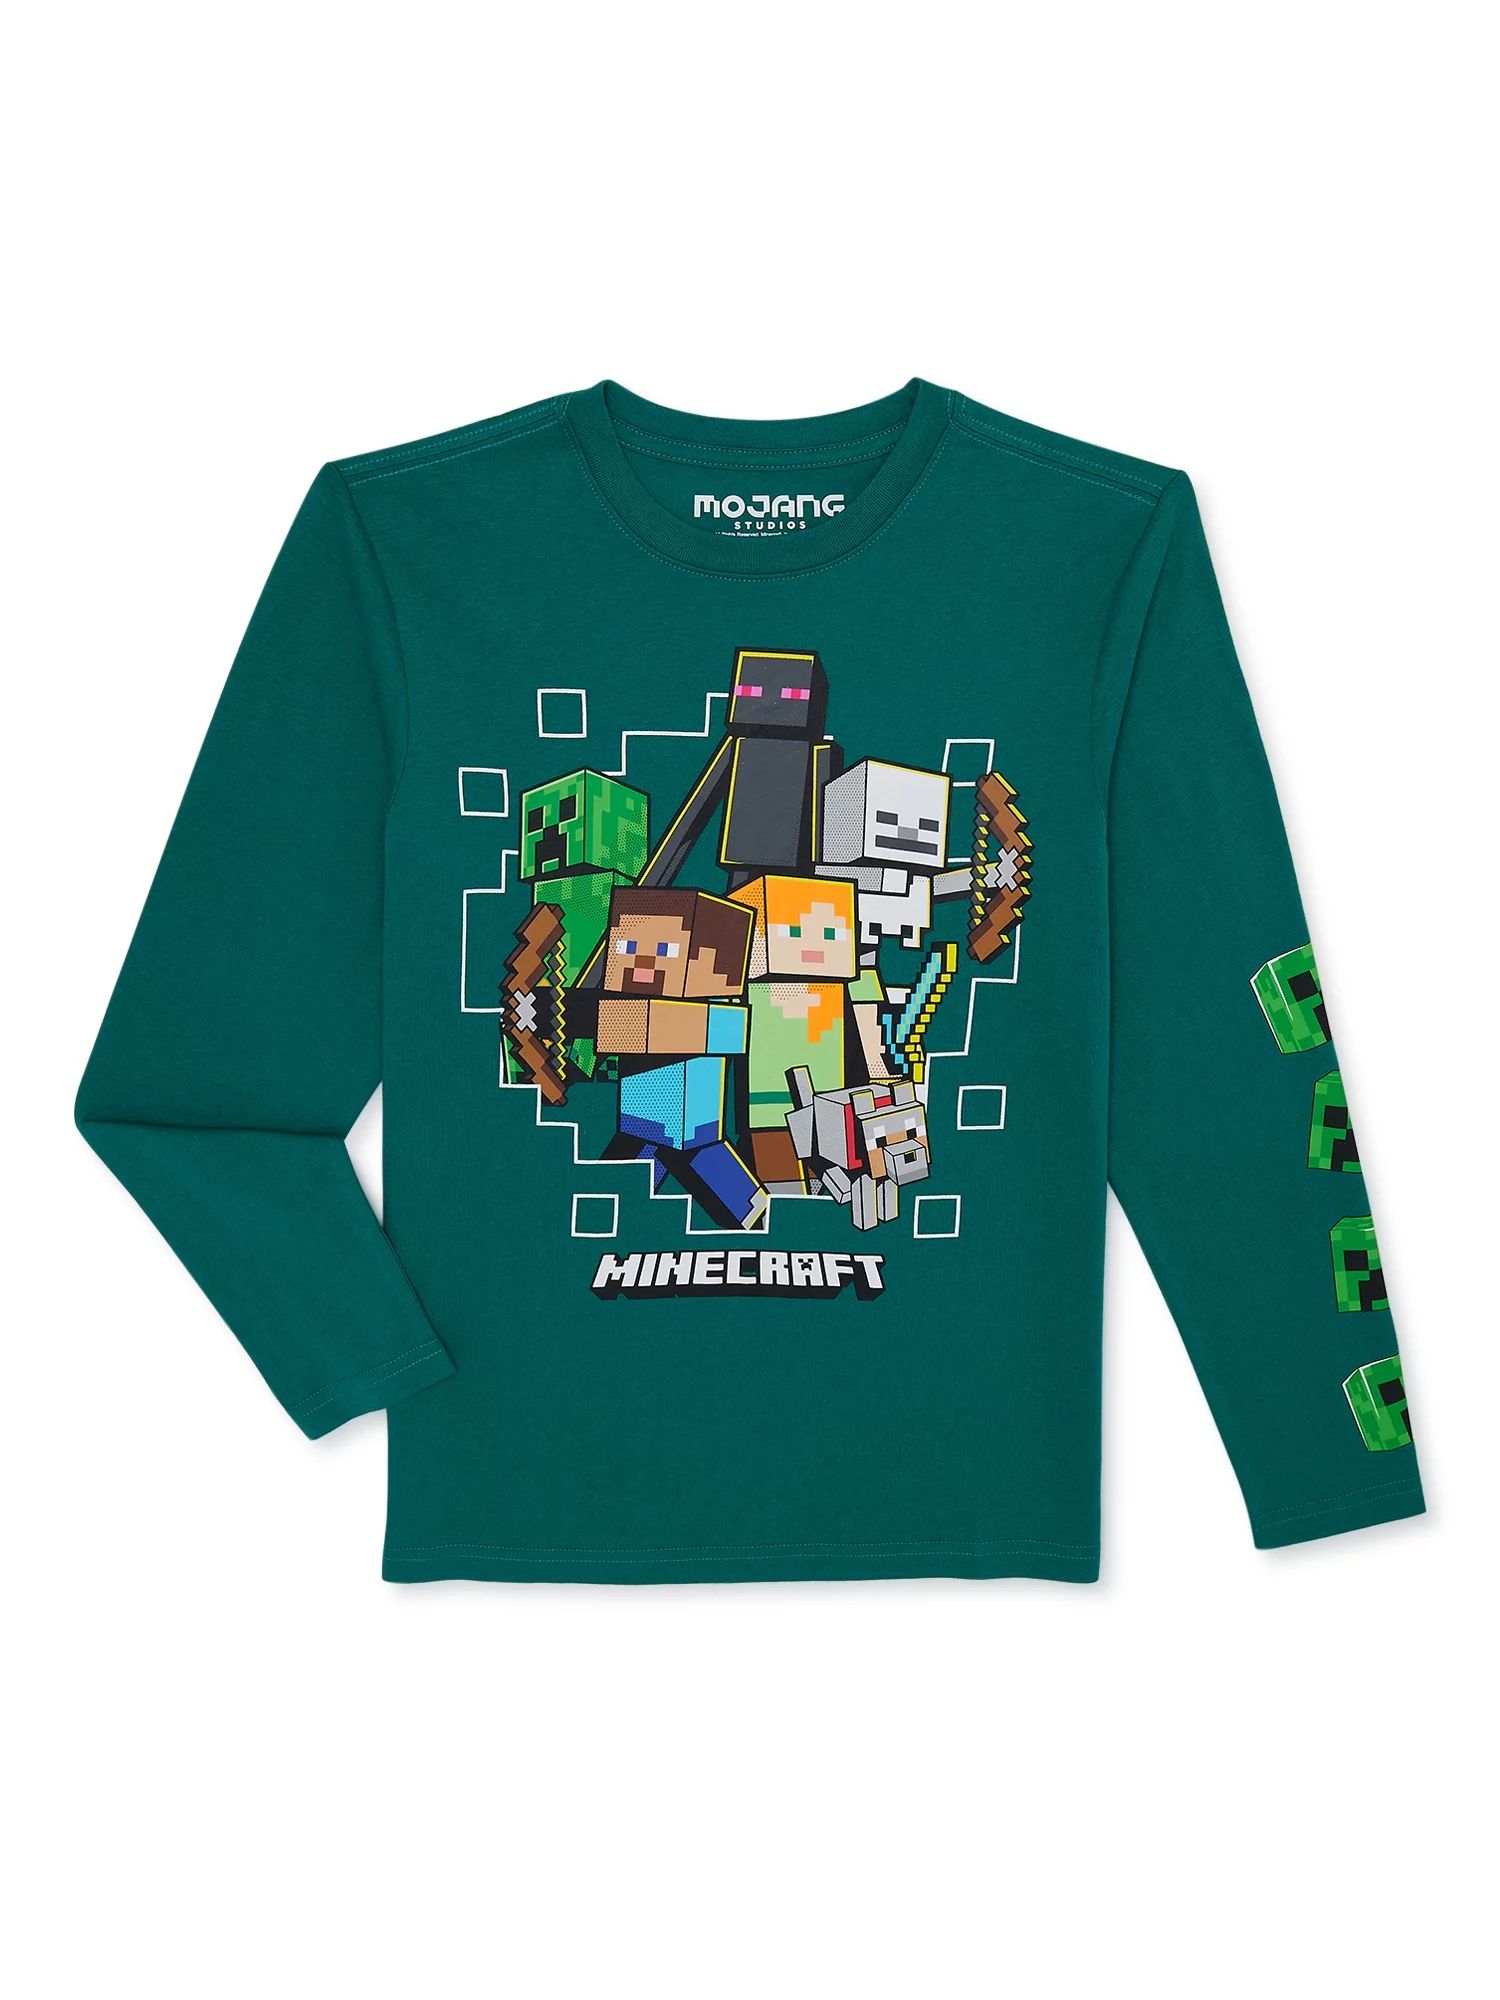 Minecraft Boys Long Sleeve Graphic T-Shirt, Sizes 4-12 | Walmart (US)